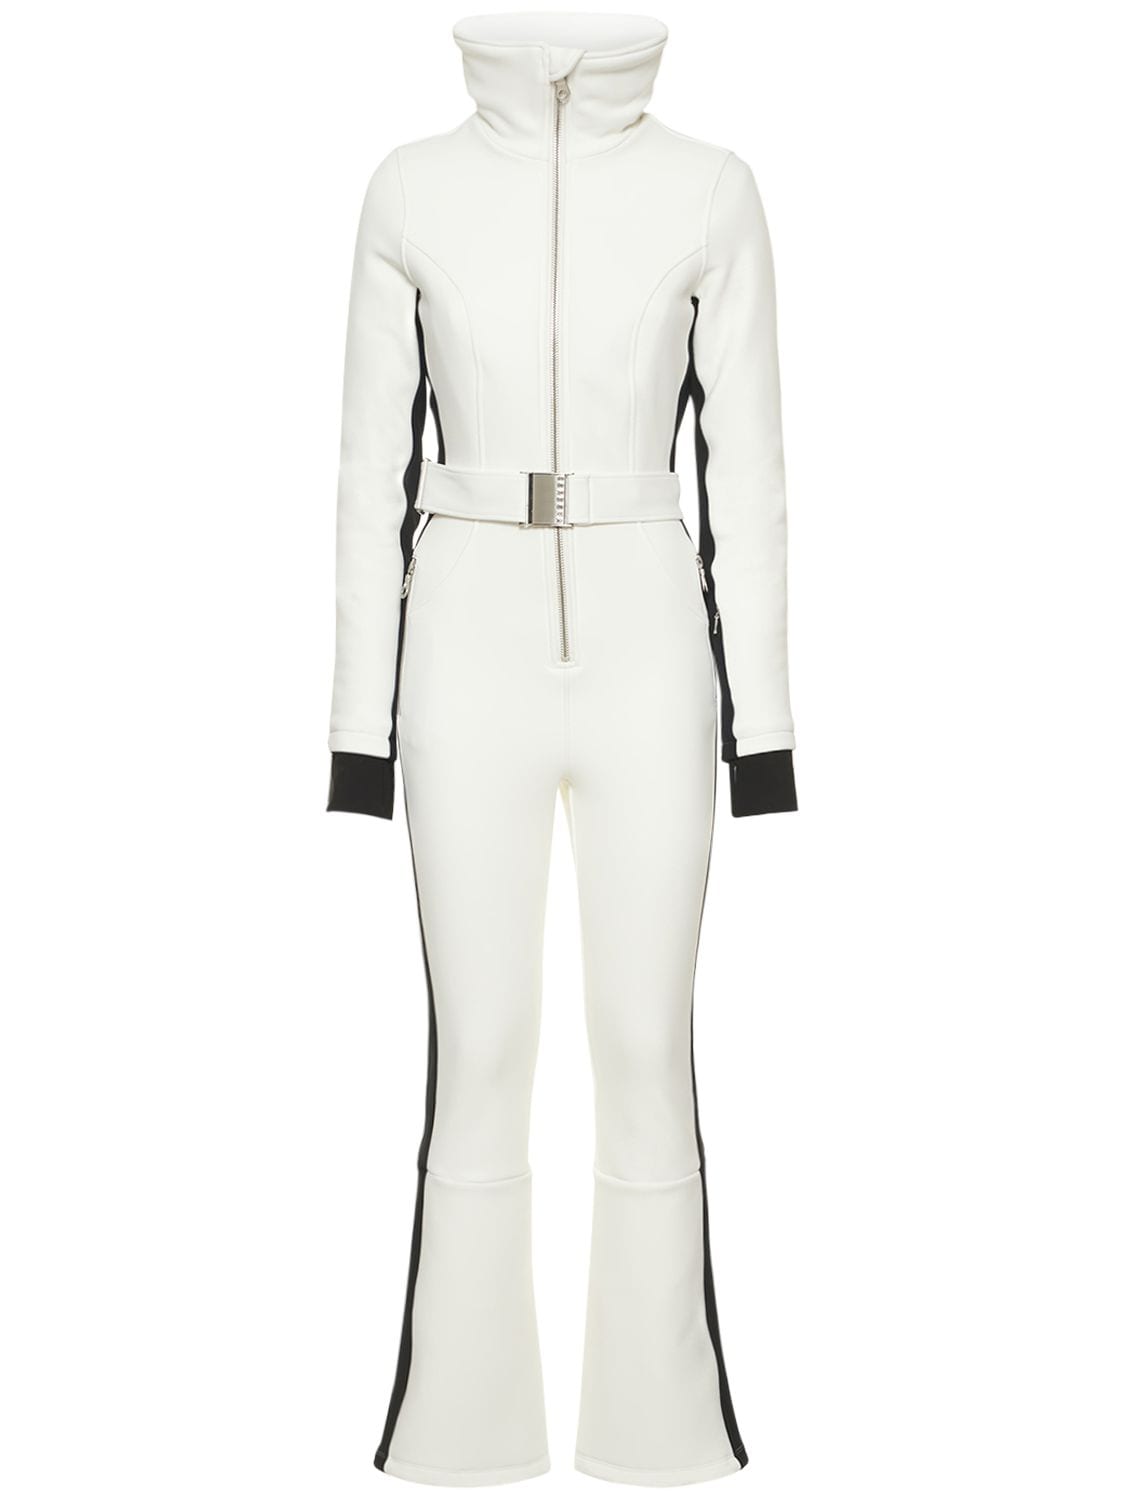 Shop Cordova Otb Ski Suit In White